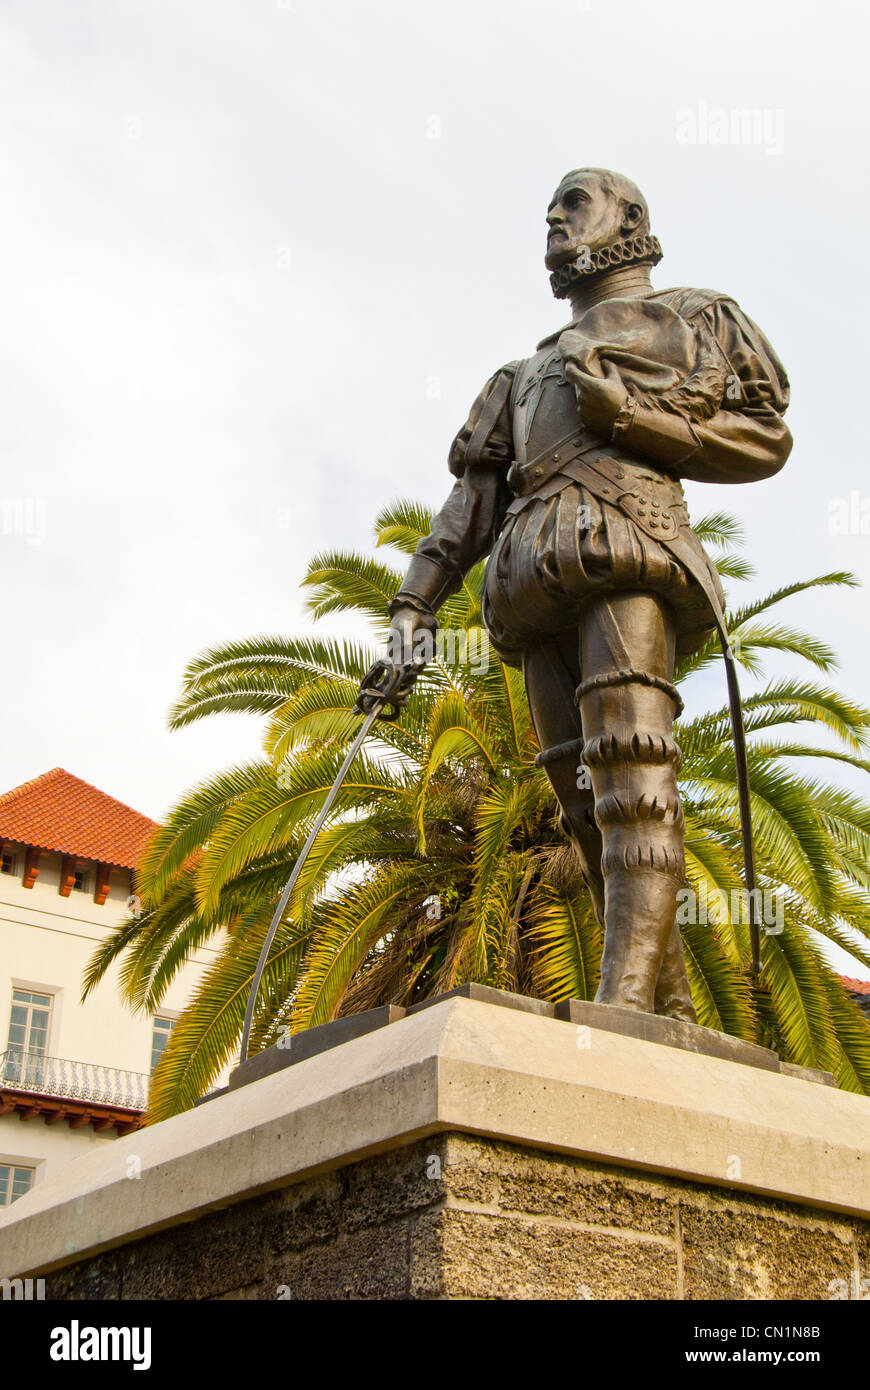 Statue of Don Pedro Menendez de Aviles in front of the Lightner museum, formerly the Alcazar Hotel, St. Augustine, Florida, USA Stock Photo